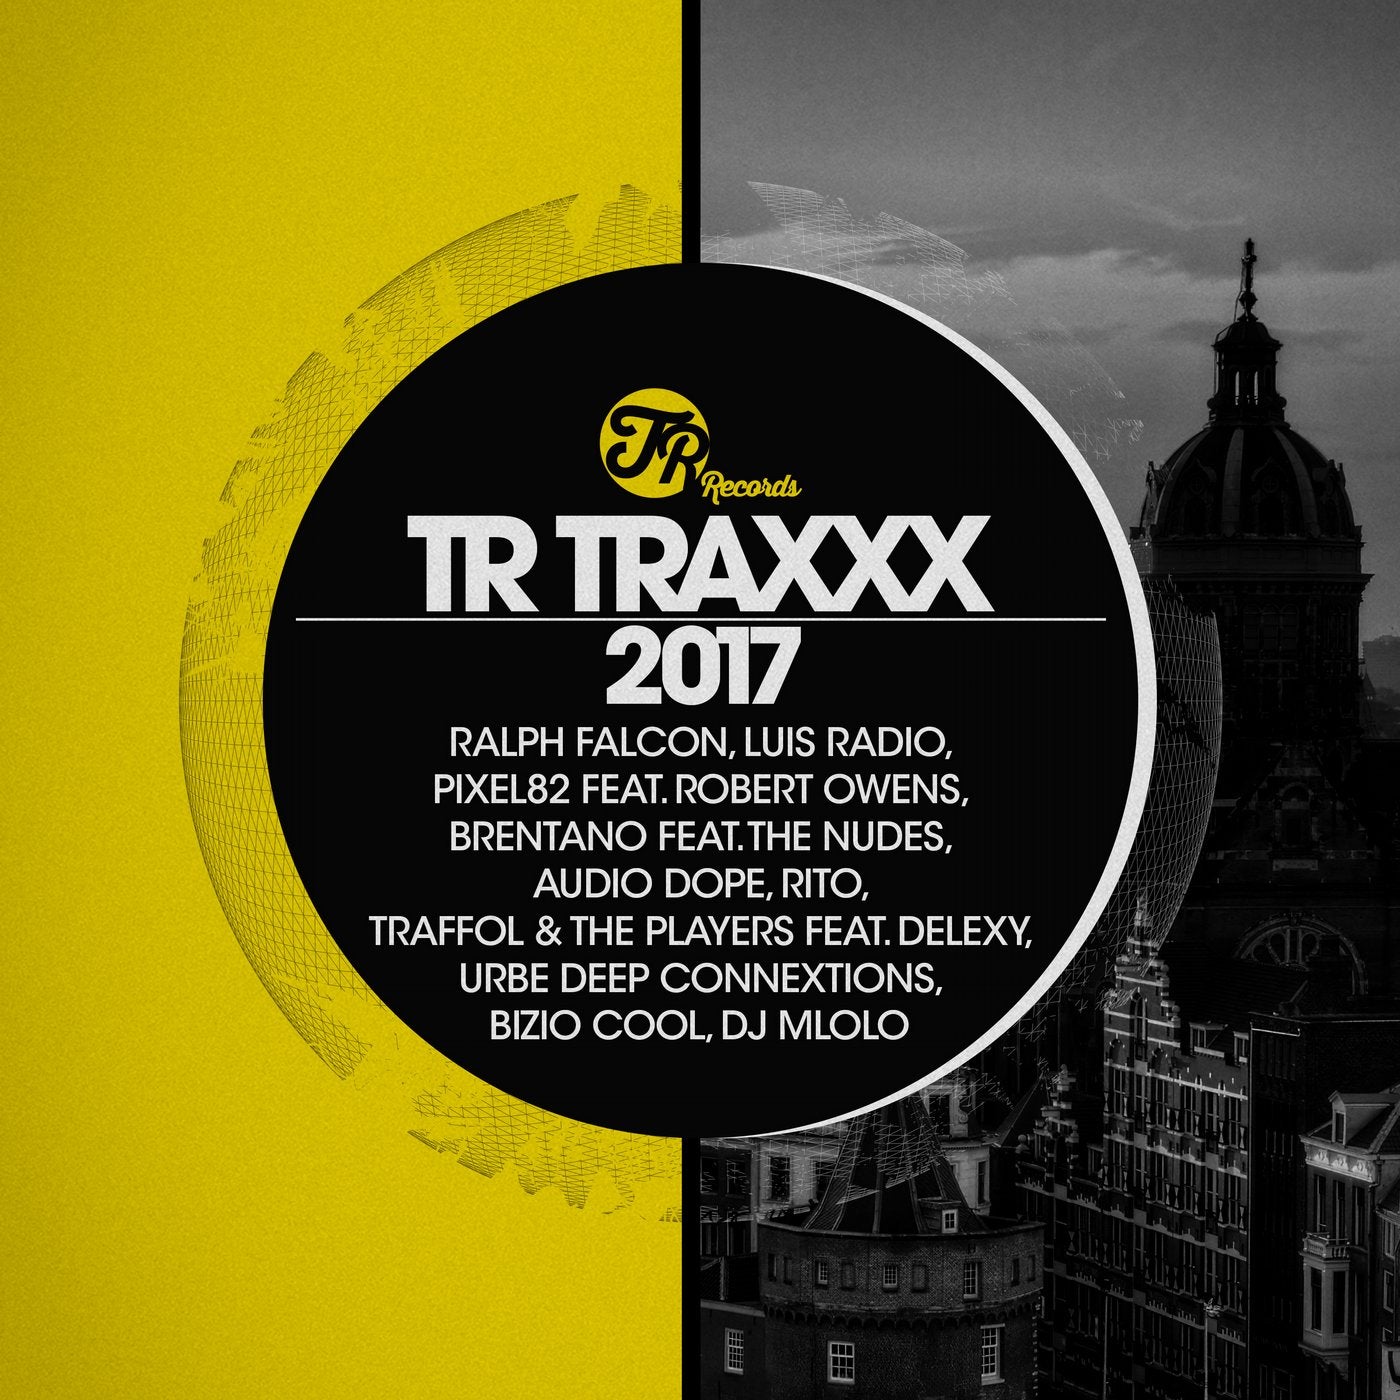 TR Traxxx 2017